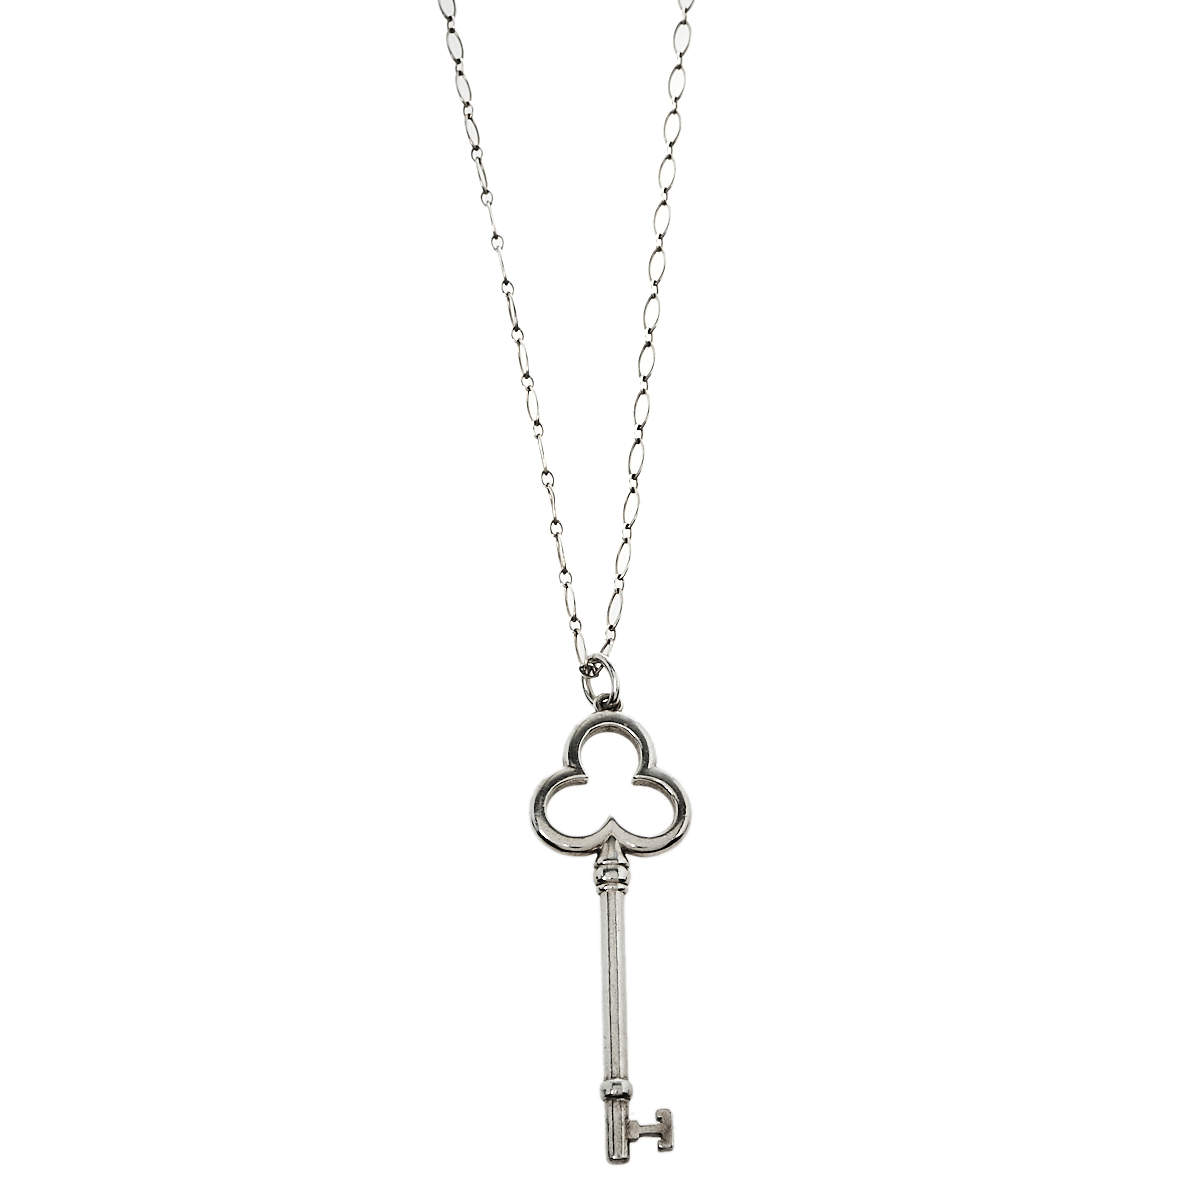 Tiffany & Co. Trefoil Key Silver Long Pendant Necklace